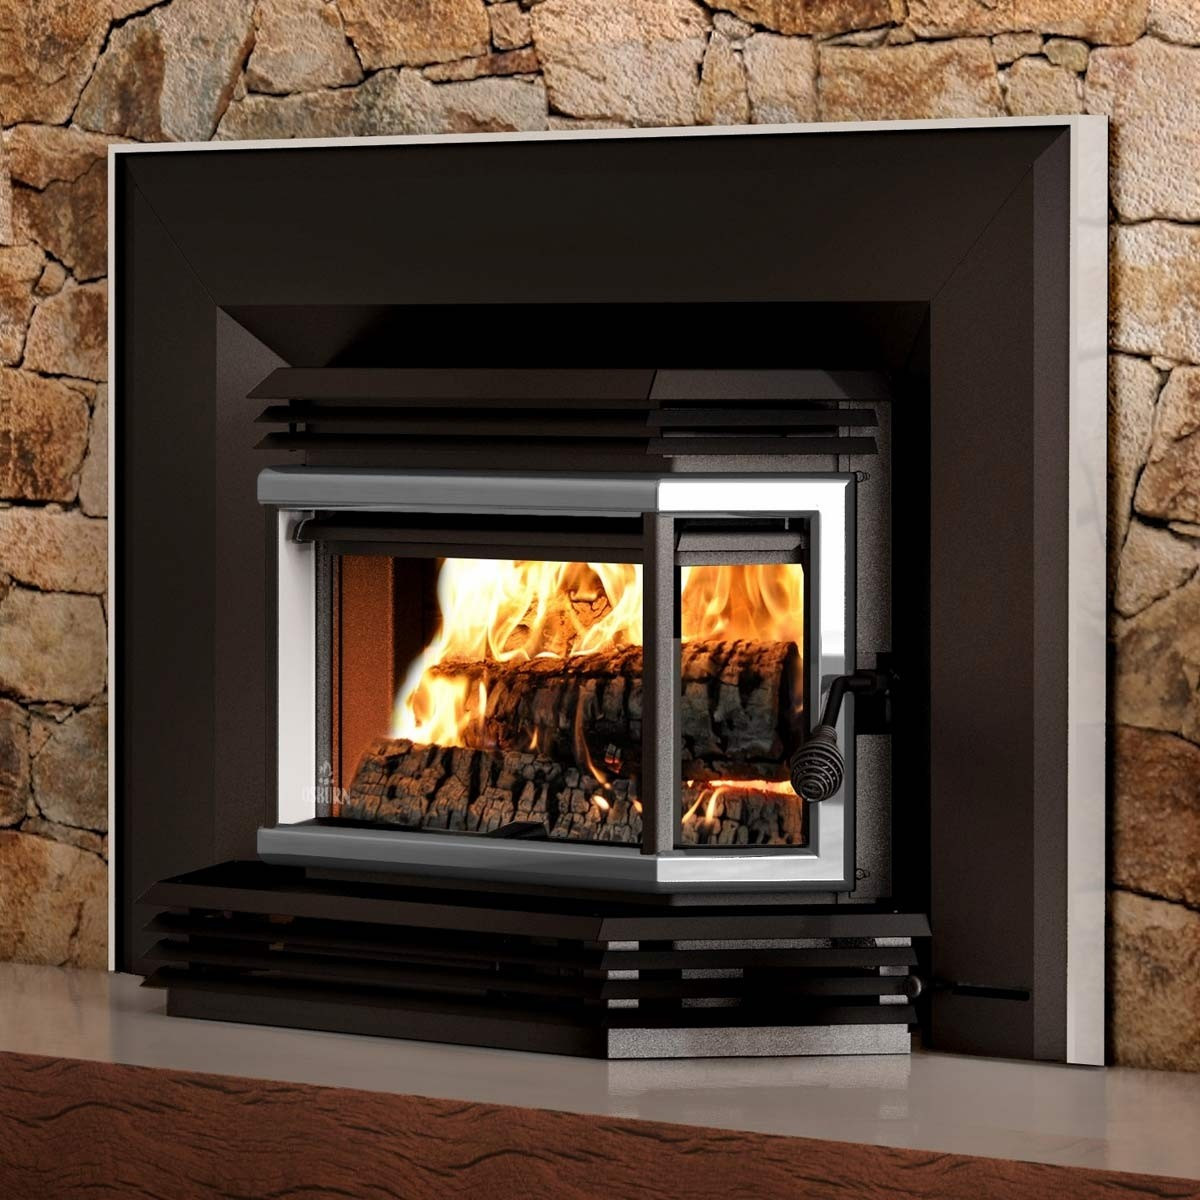 Best ideas about Wood Burning Fireplace Insert
. Save or Pin Osburn 2200 Metallic Black EPA Wood Burning Fireplace Now.